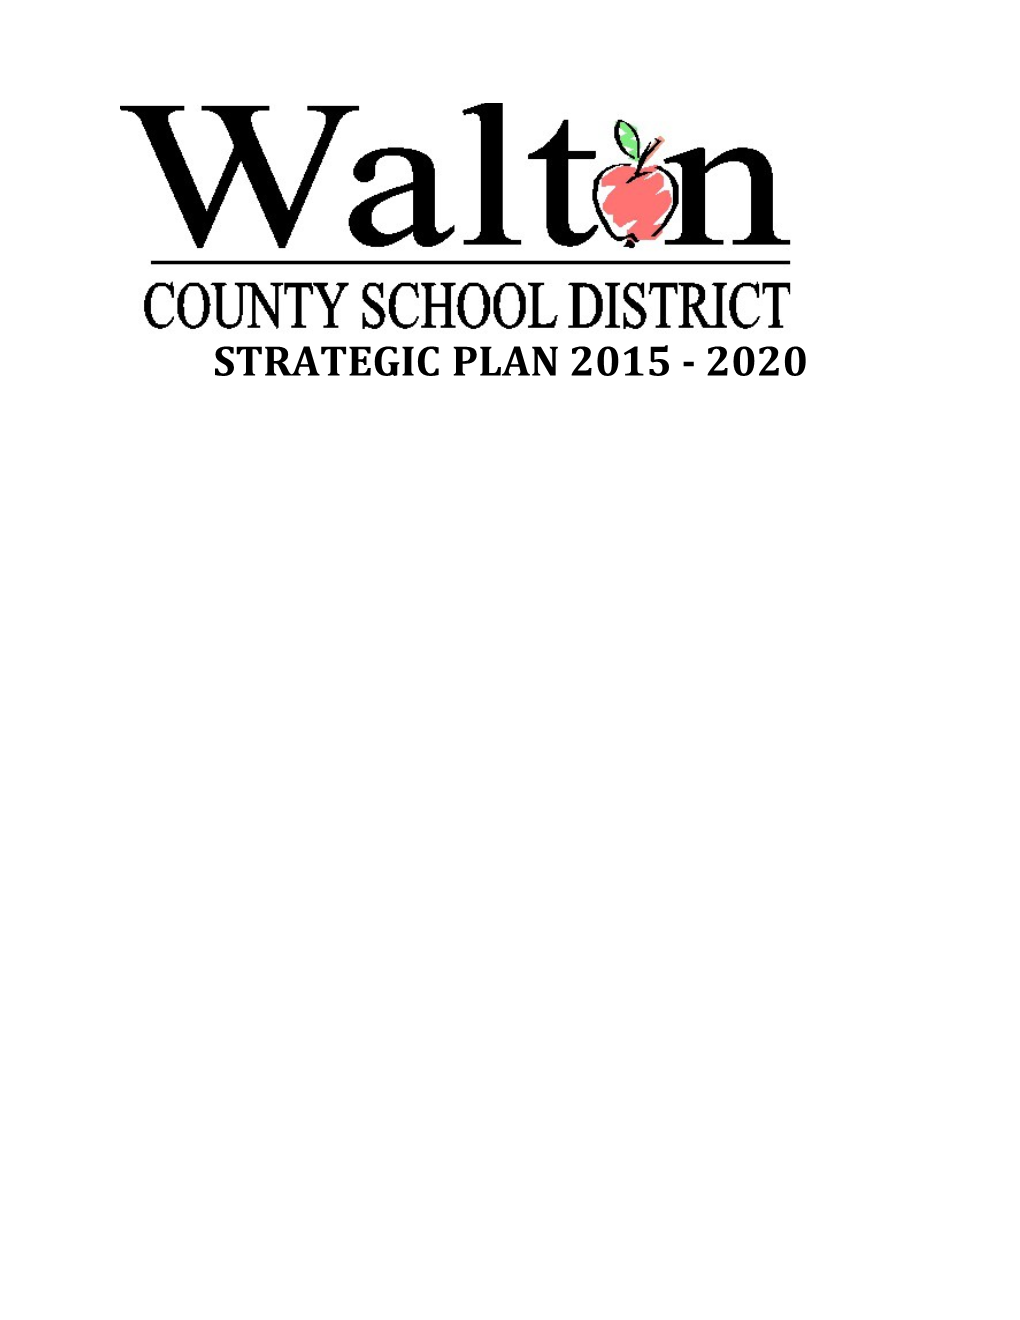 Walton County School Board